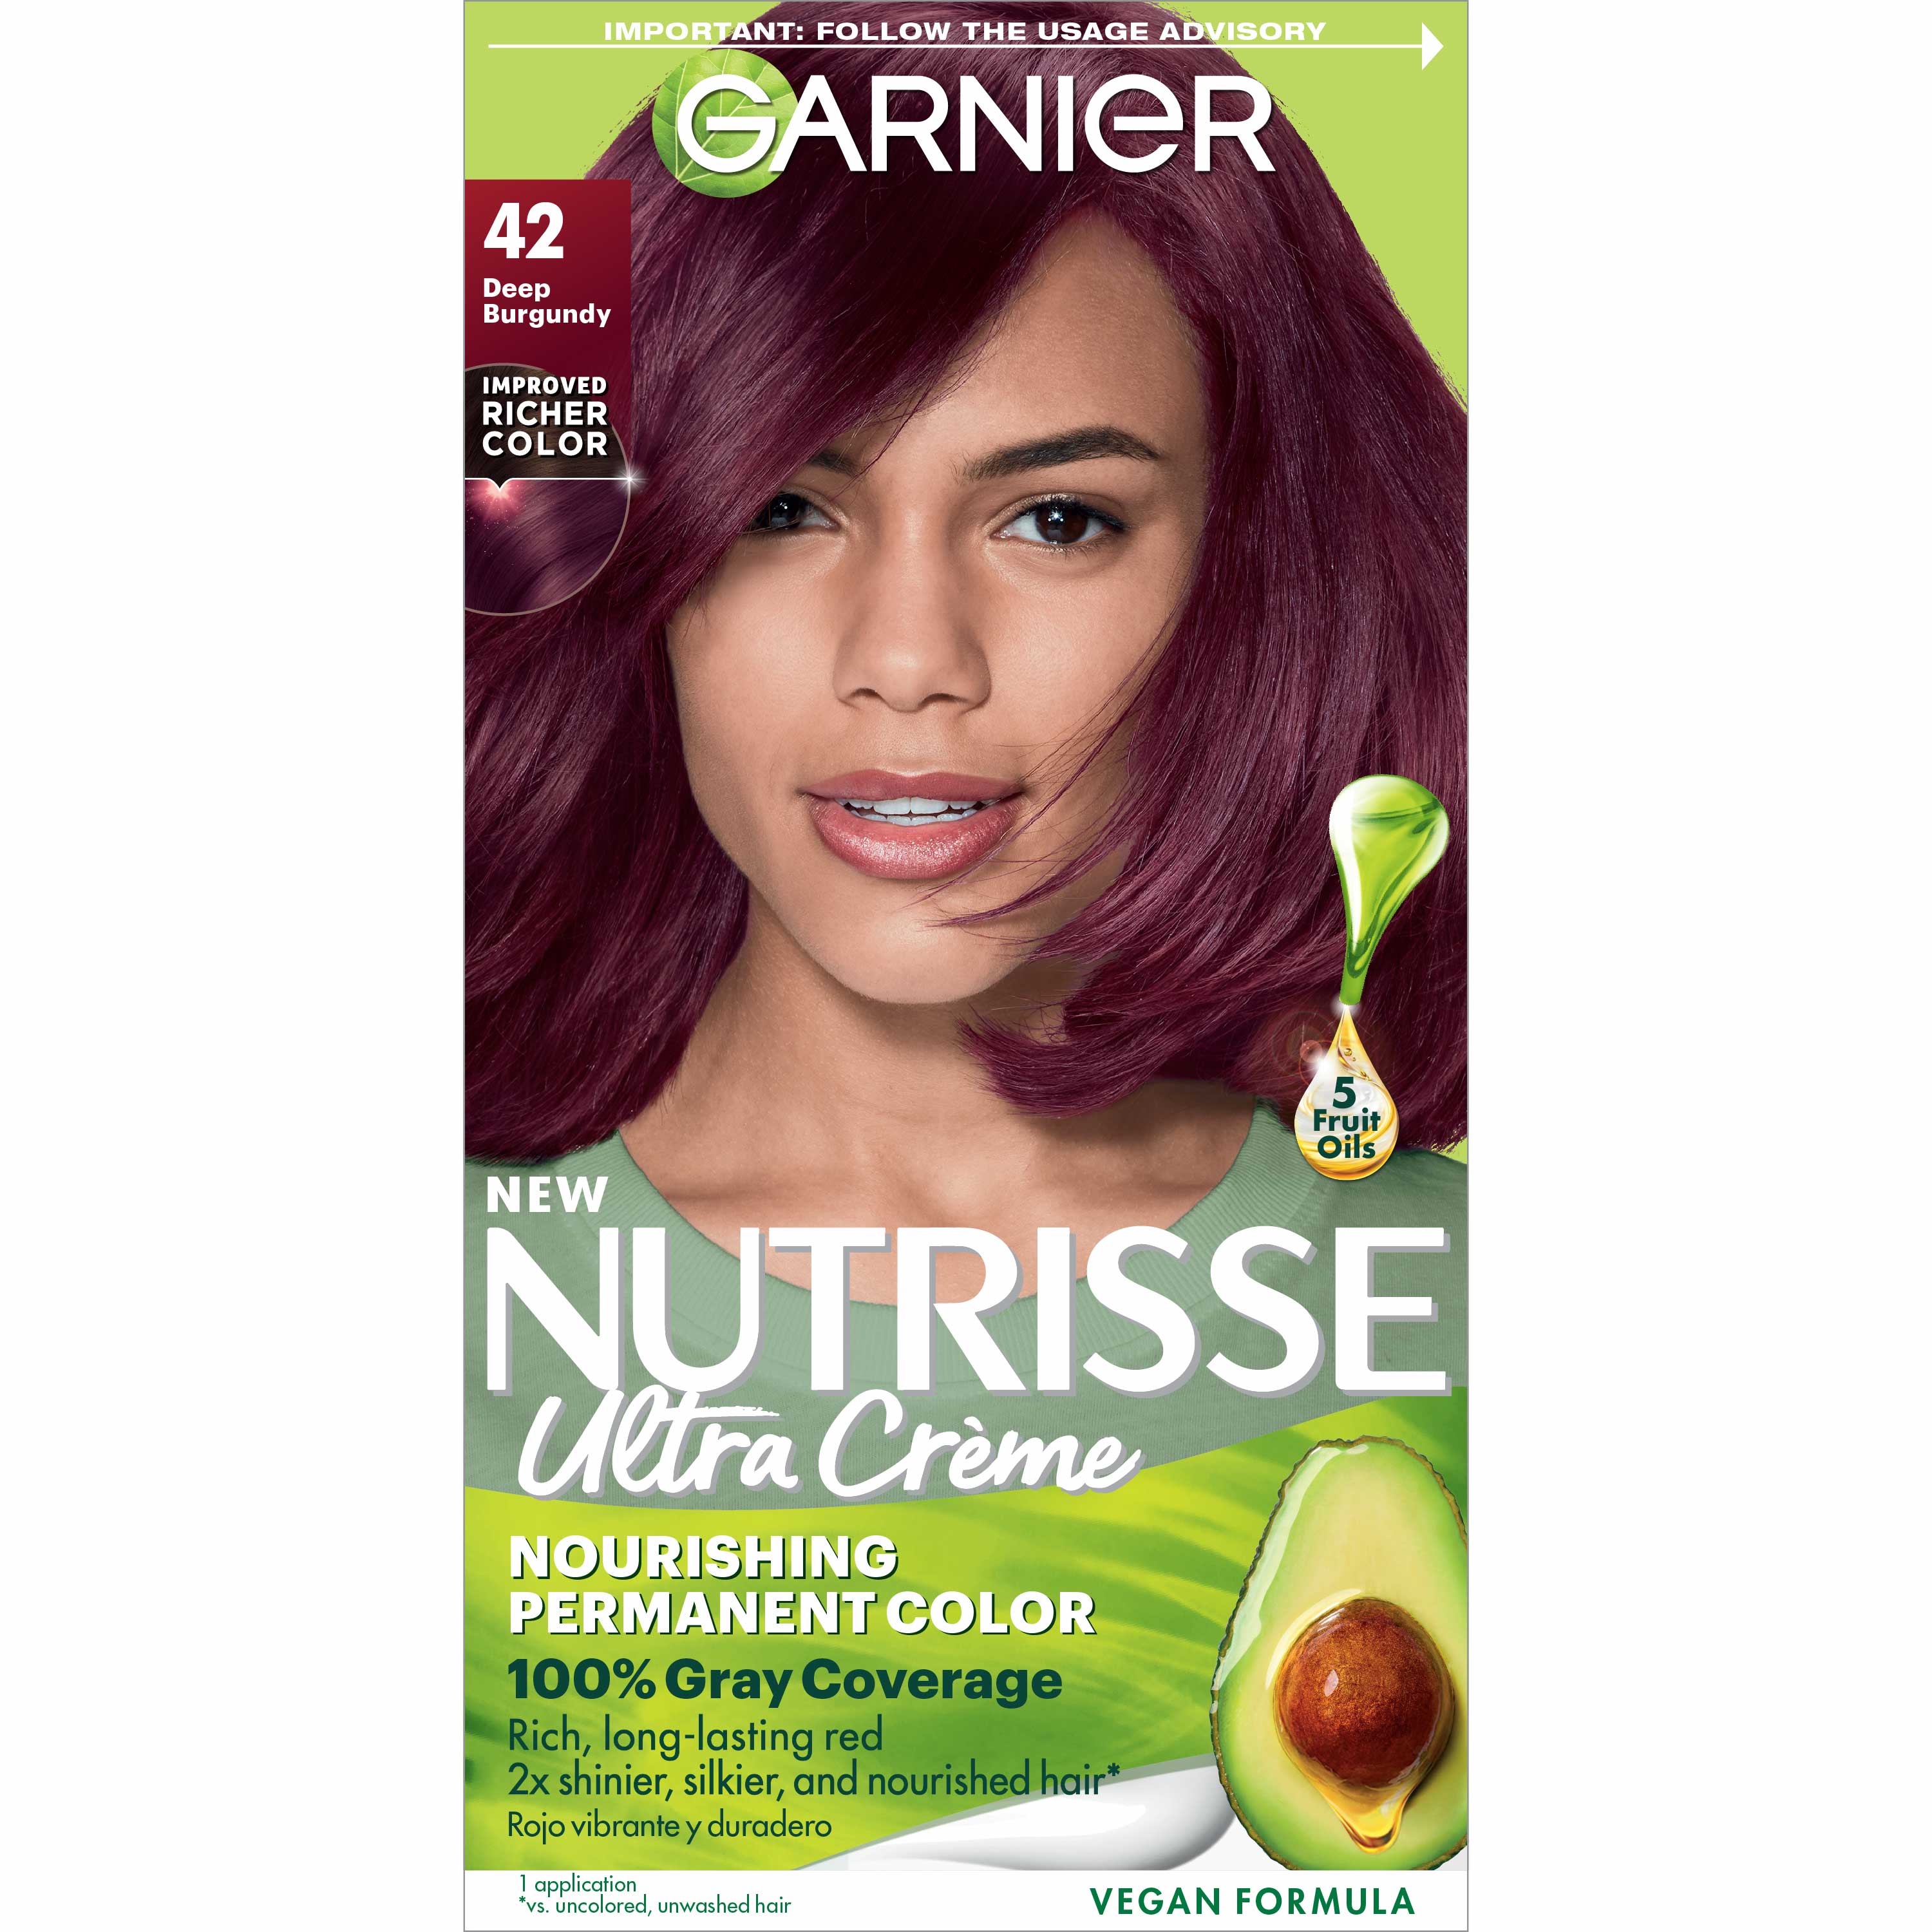 Garnier Nutrisse Nourishing Hair Color Creme, 42 Deep Burgundy Black Cherry - image 1 of 10